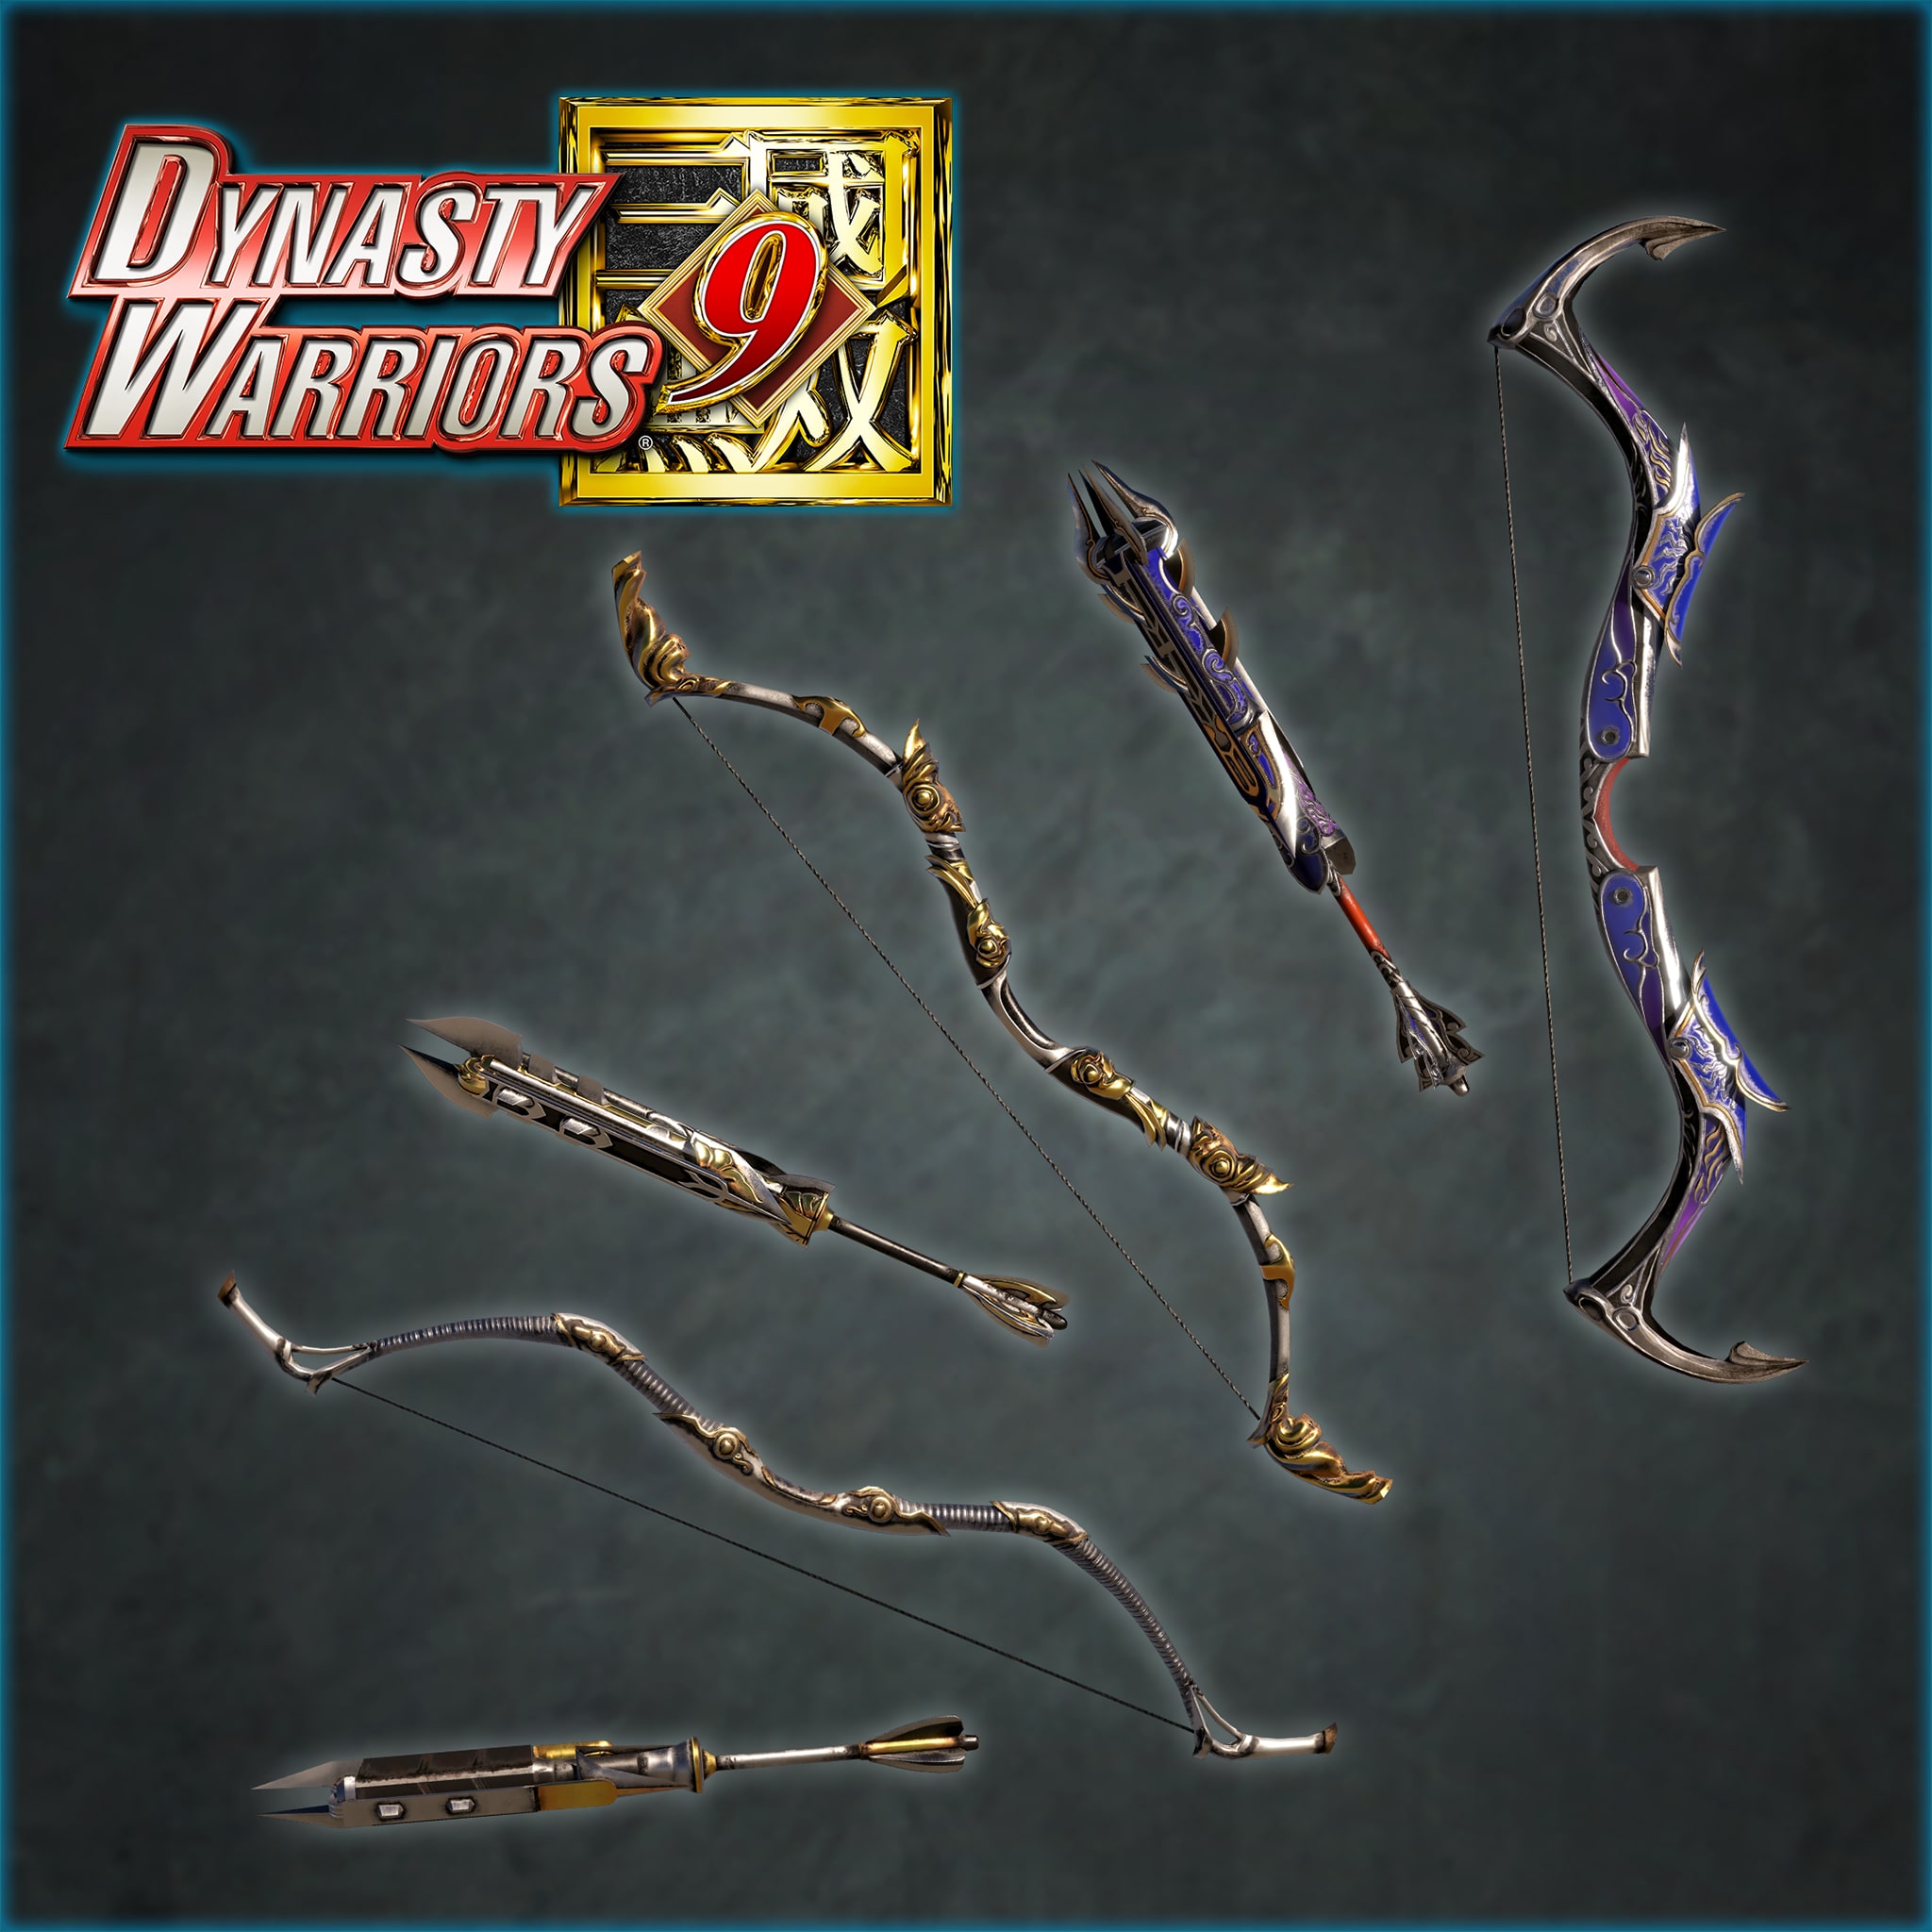 DYNASTY WARRIORS 9: Arma adicional 'Arco y vara'